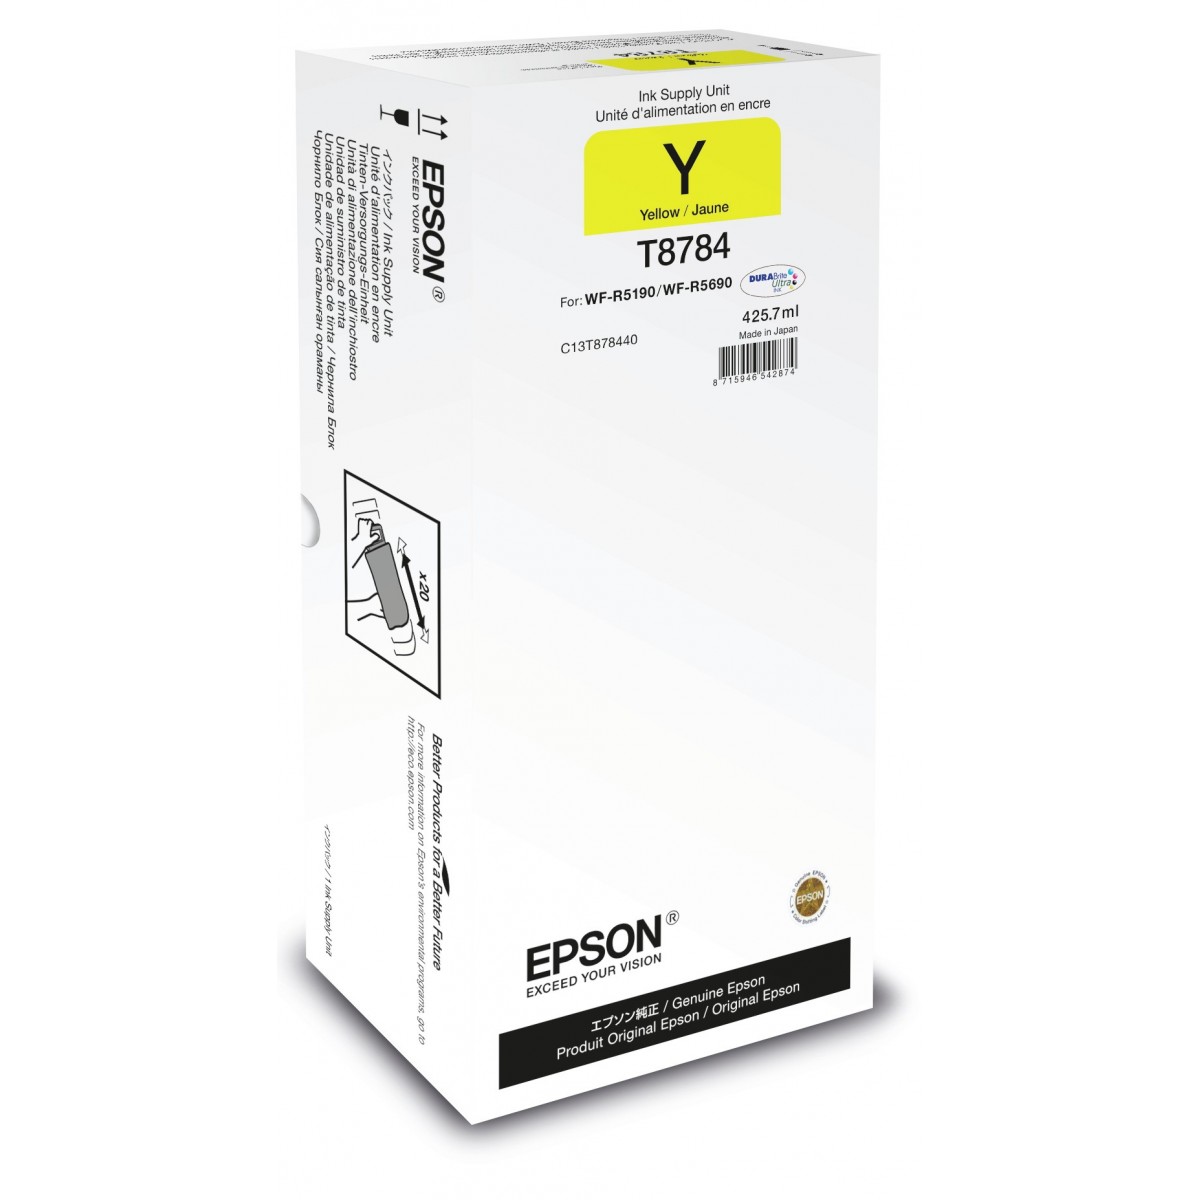 Epson Yellow XXL Ink Supply Unit - Original - Pigment-based ink - Yellow - WorkForce Pro WF-R5xxx - 1 pc(s) - Japan